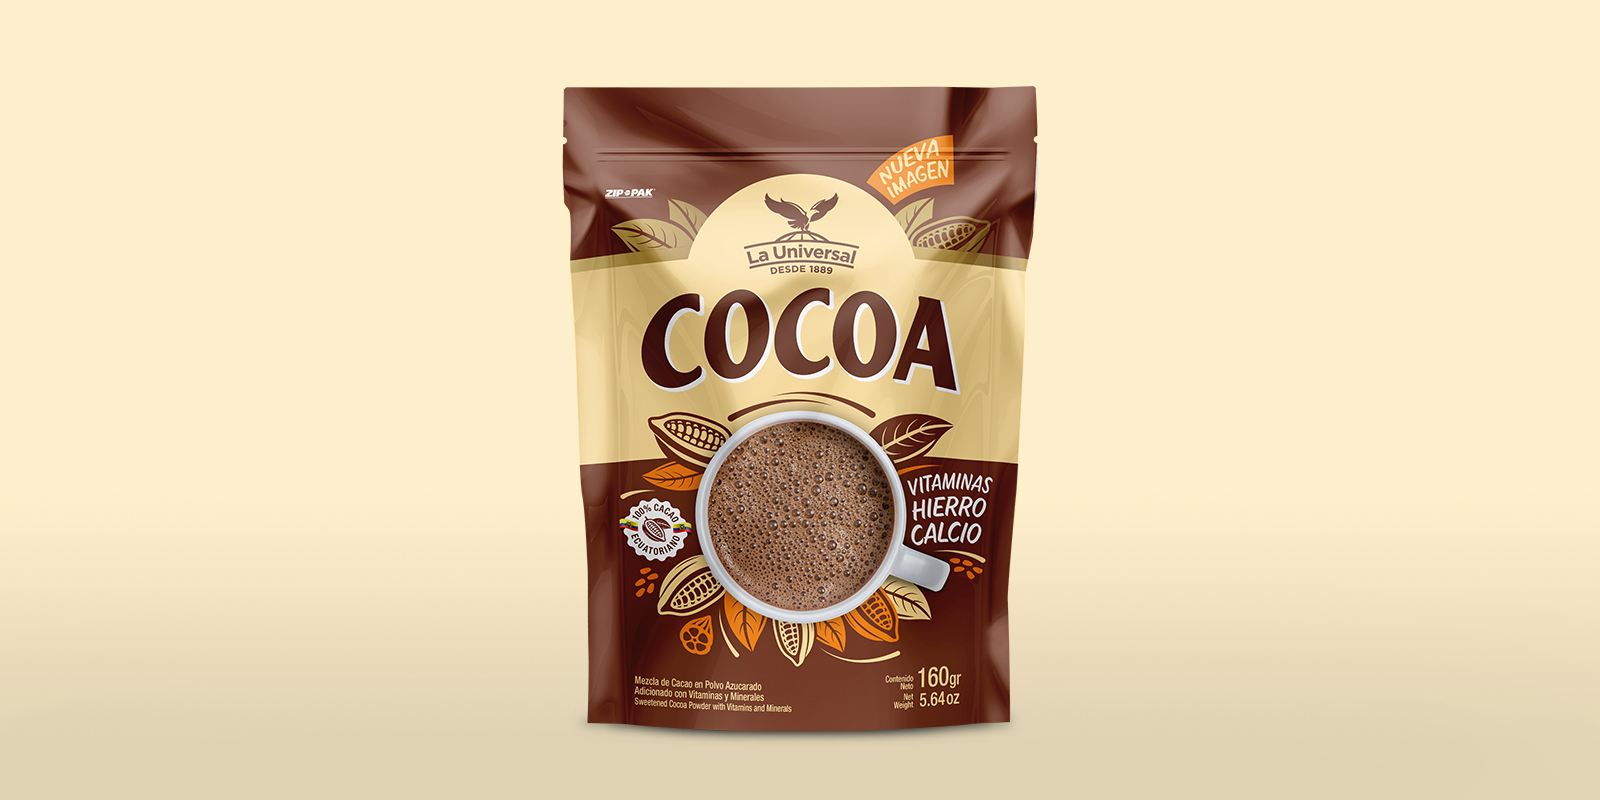 Cocoa La Universal – La Universal